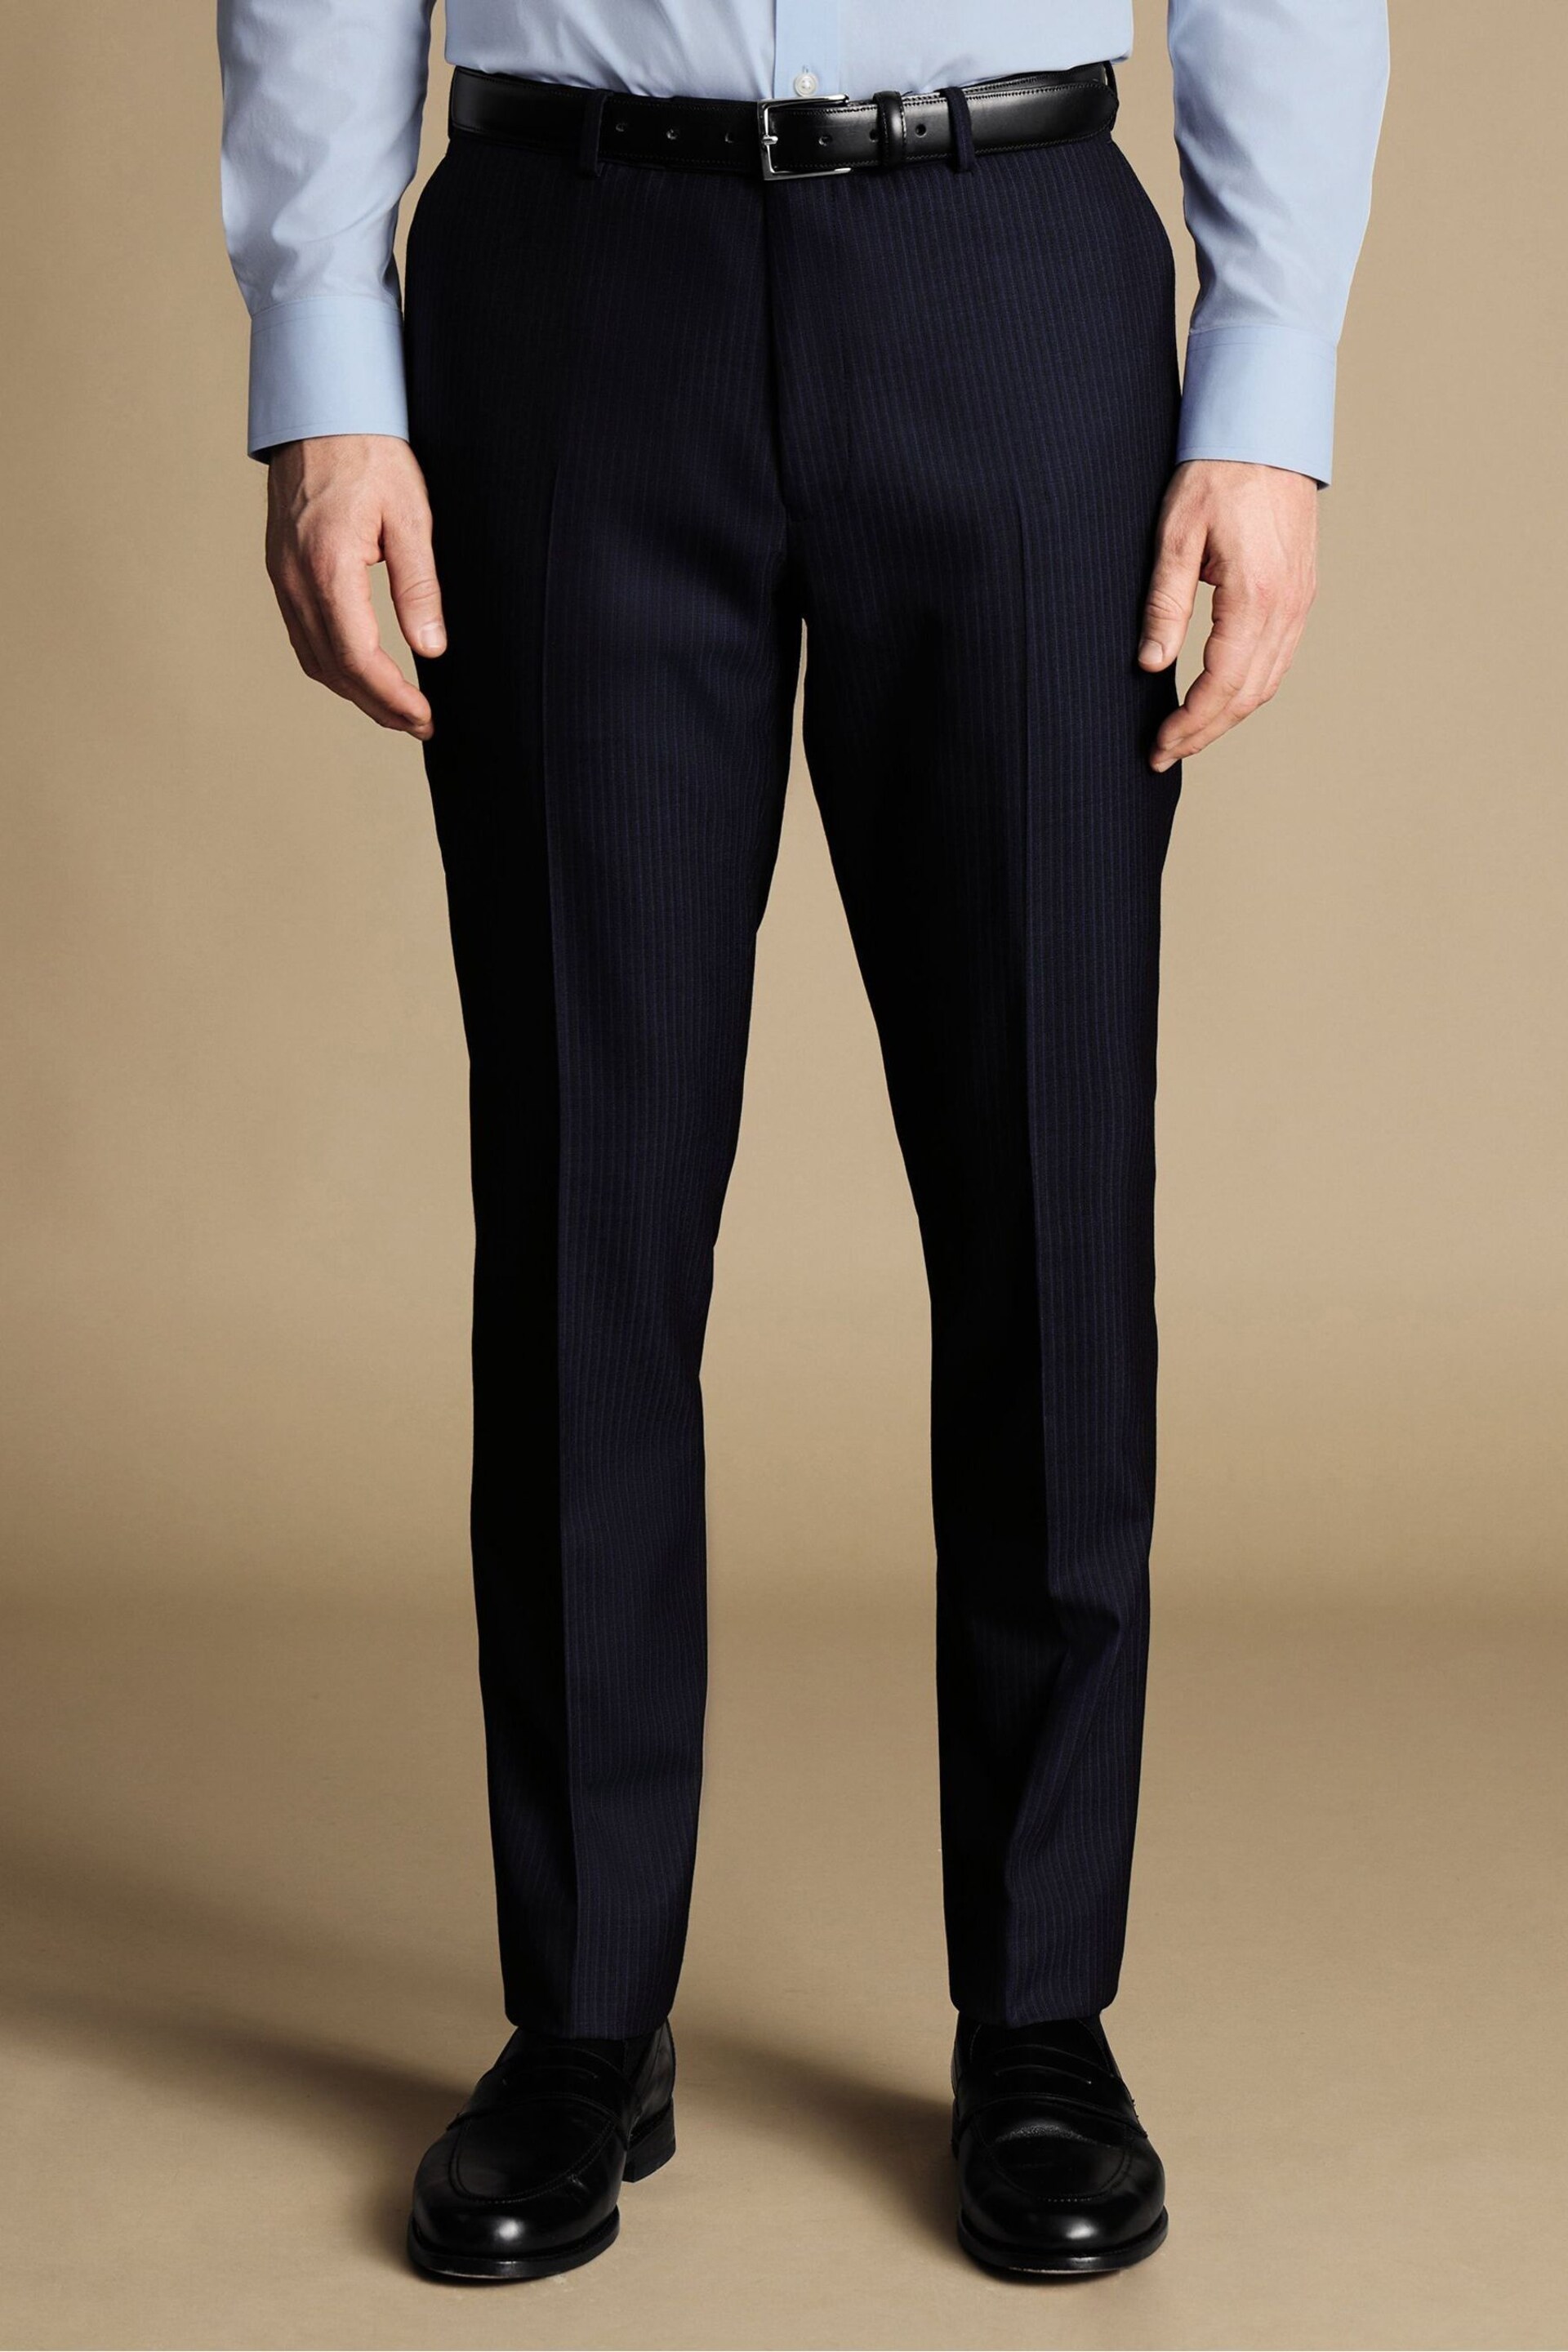 Charles Tyrwhitt Blue Stripe Slim Fit Suit Trousers - Image 2 of 4